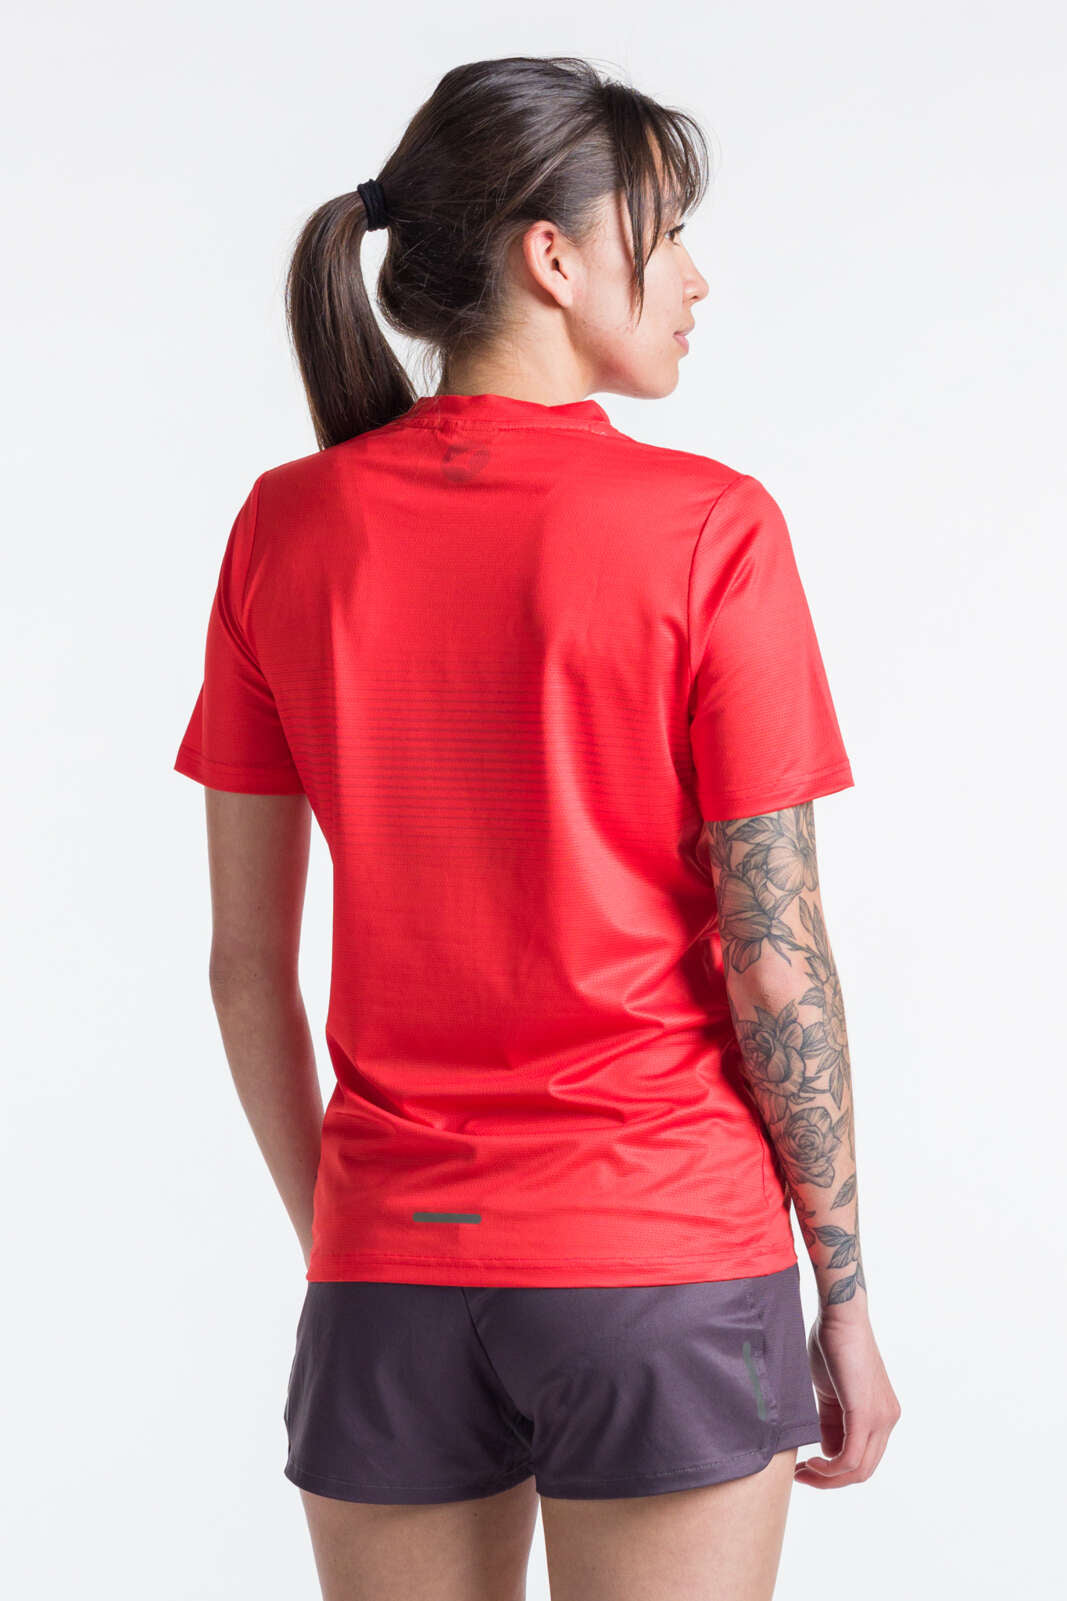 Women's Red Running Shirt - Back View